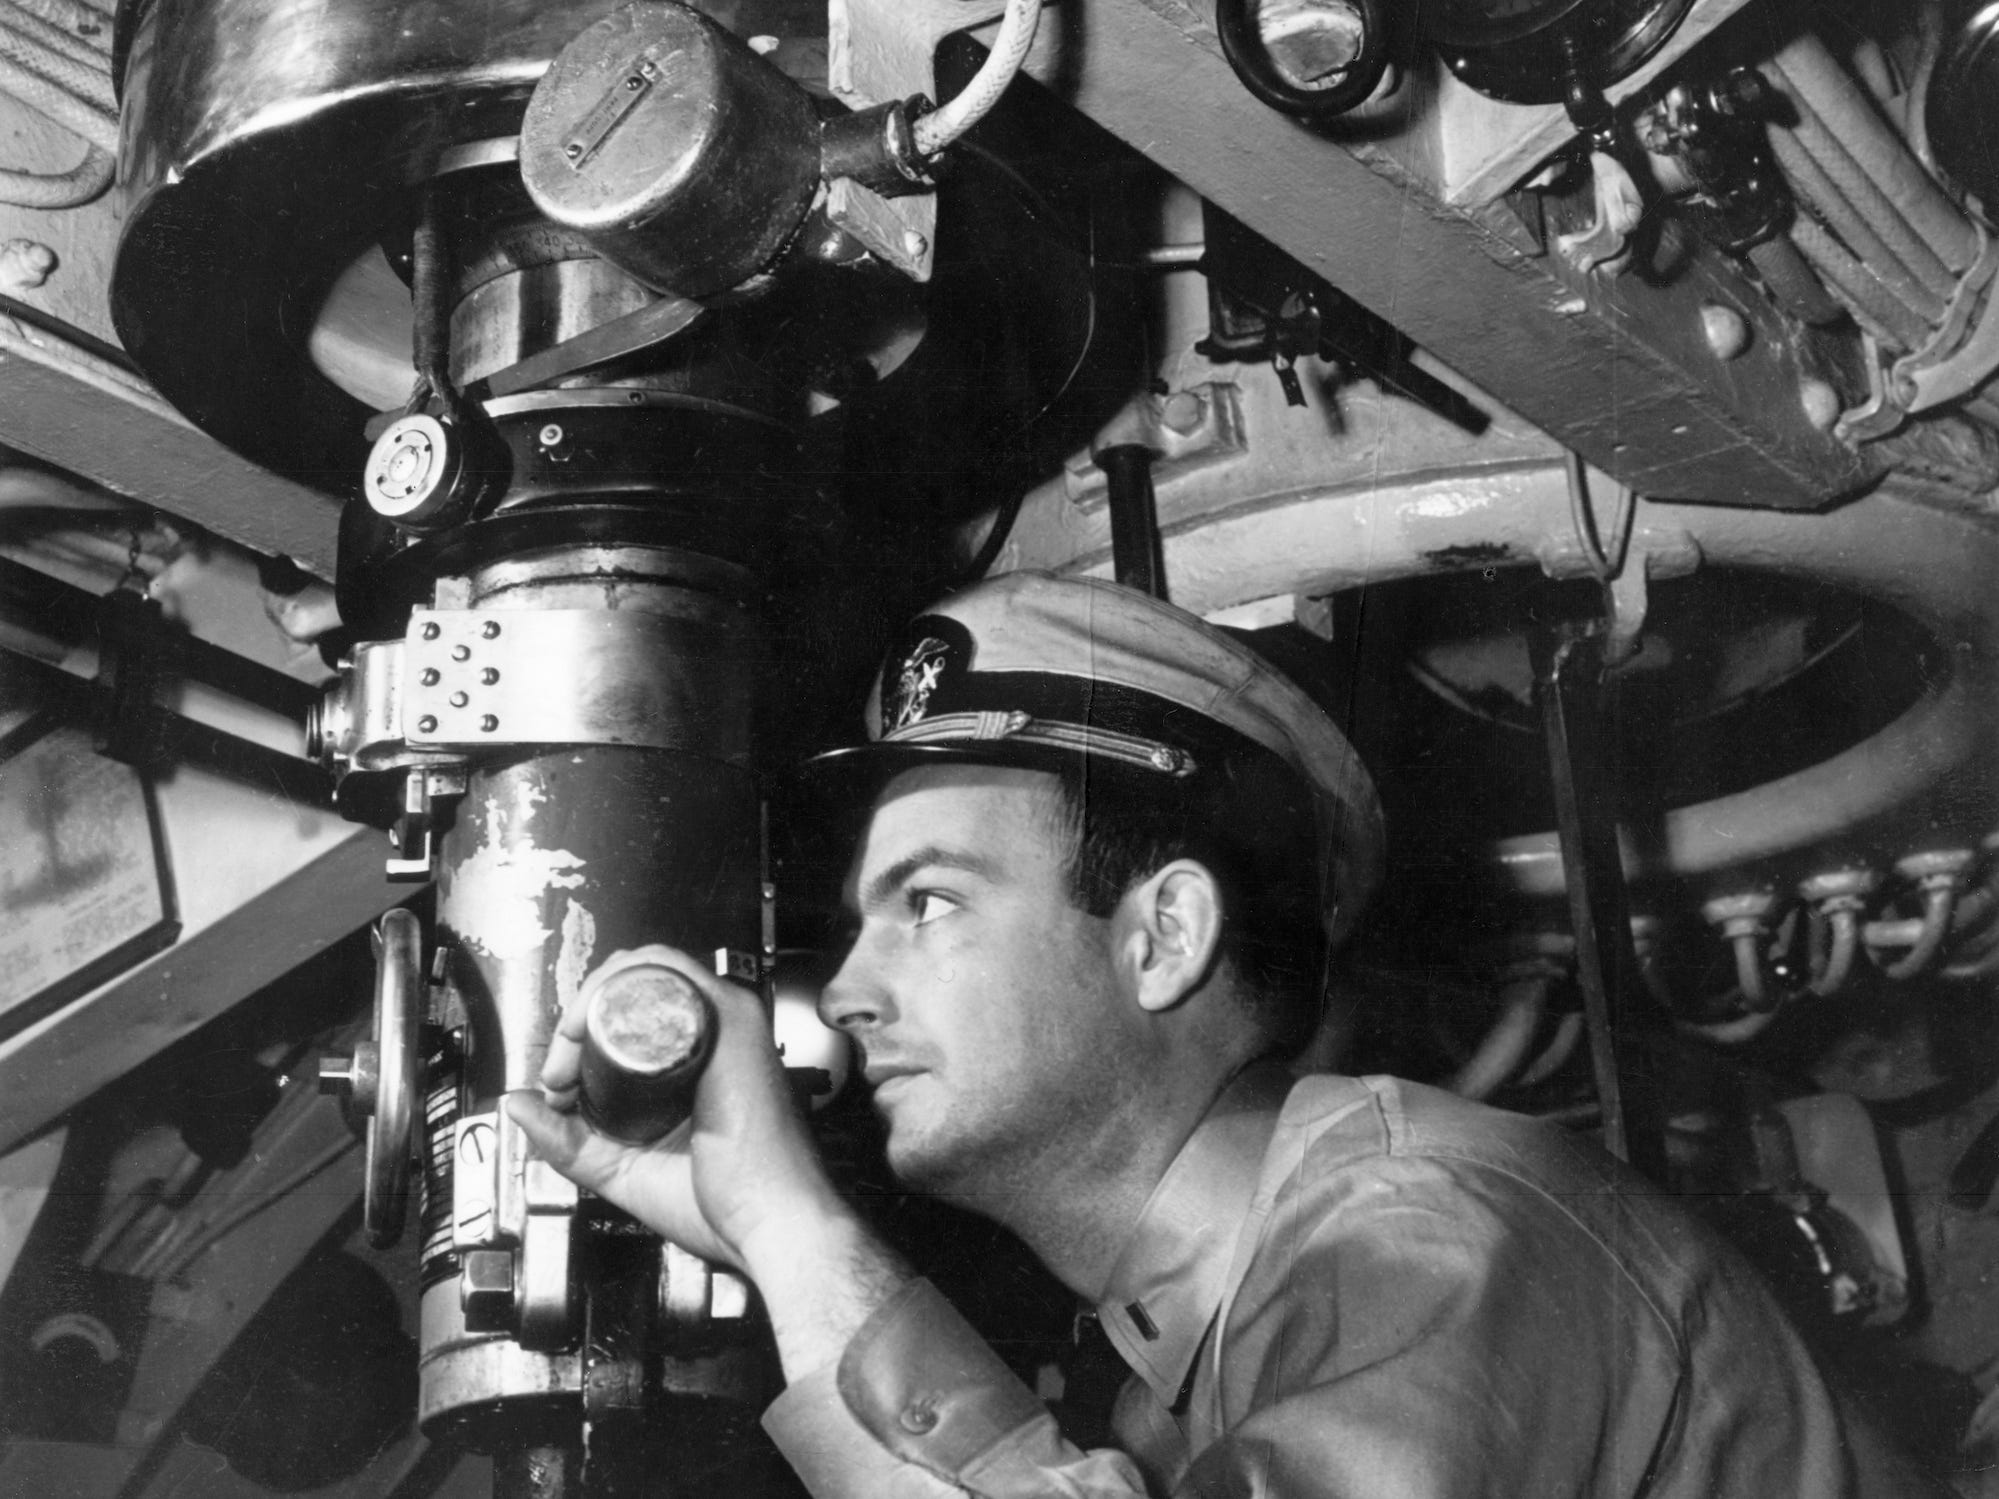 Navy officer looks through submarine periscope